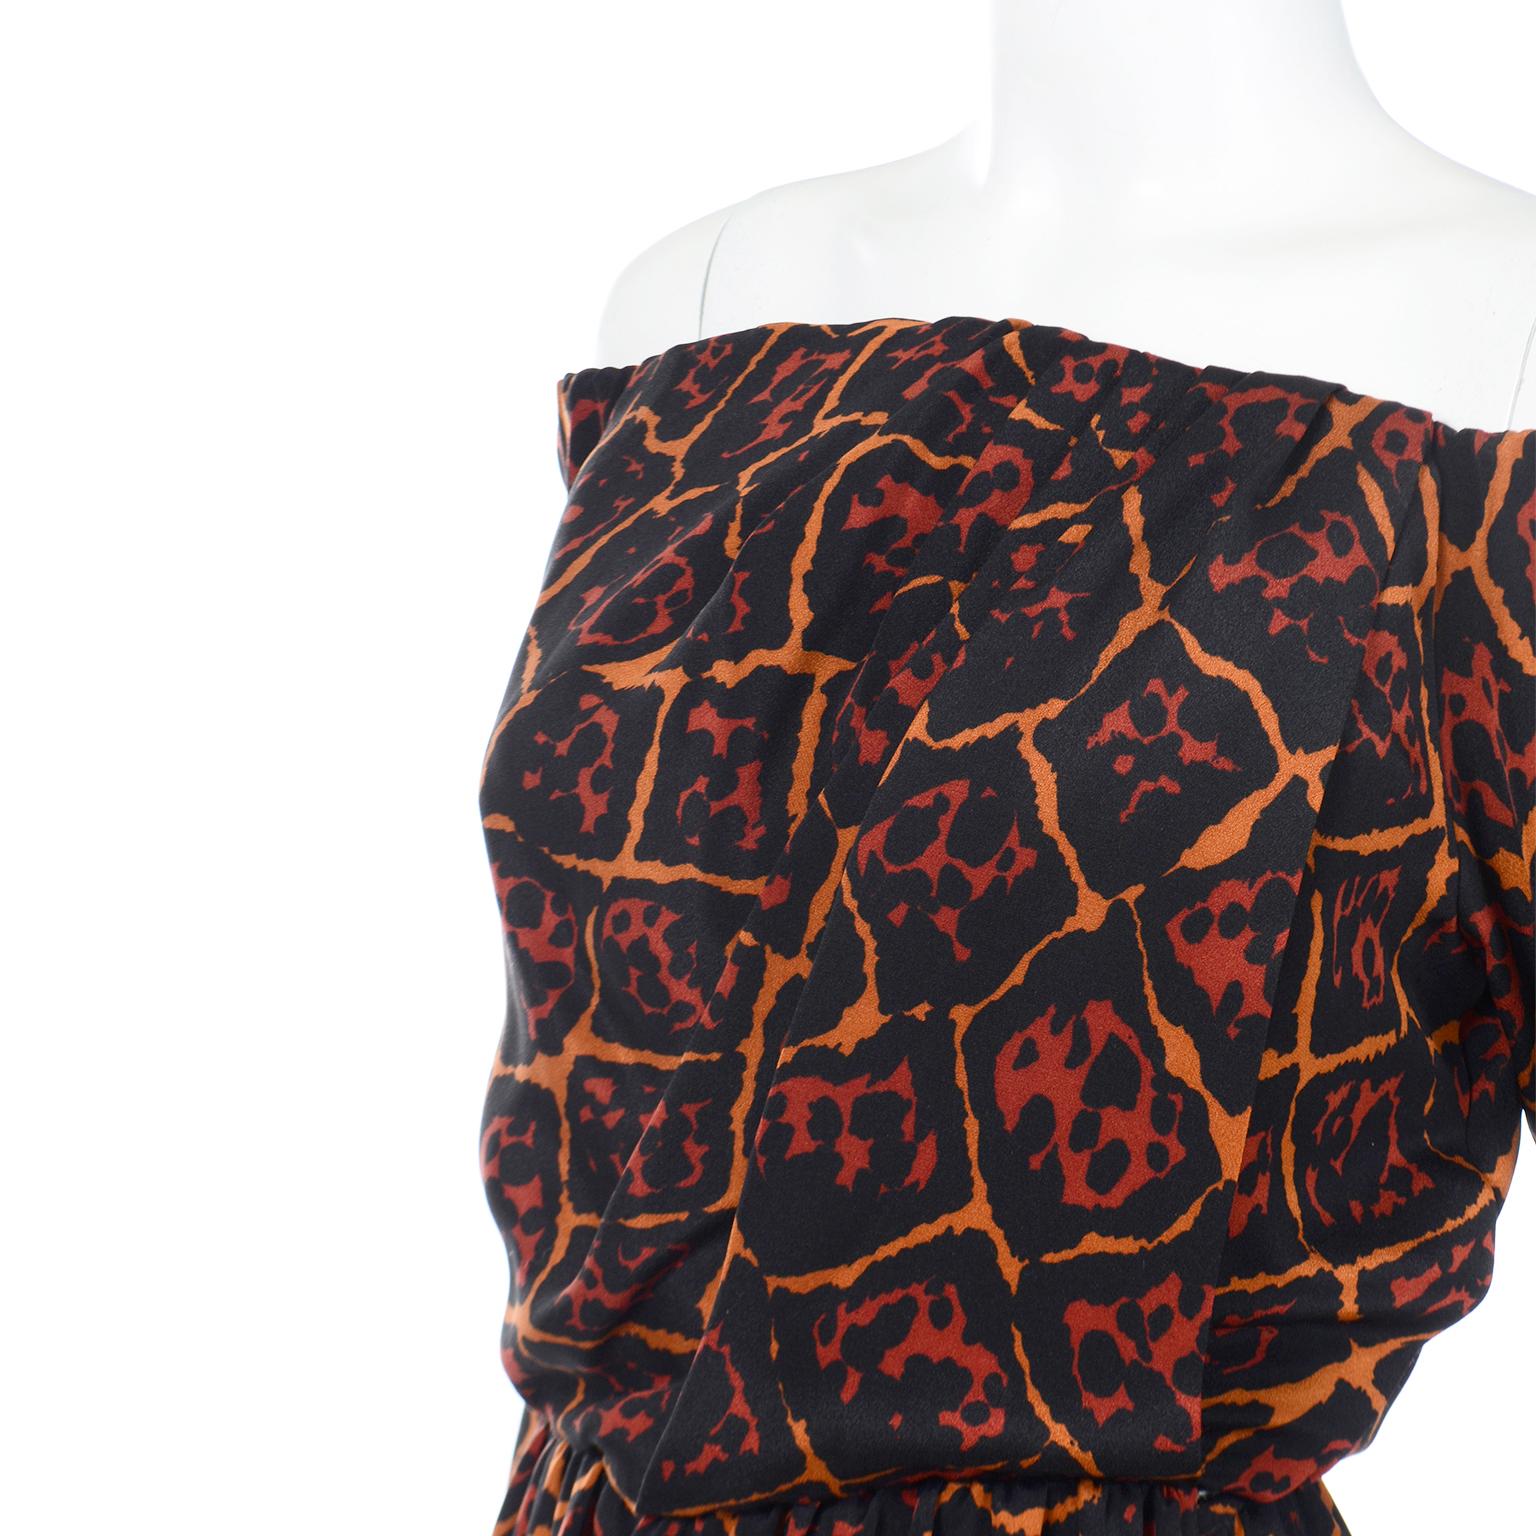 Yves Saint Laurent 1989 Brown & Orange Animal Print Runway Dress Documented  For Sale 6